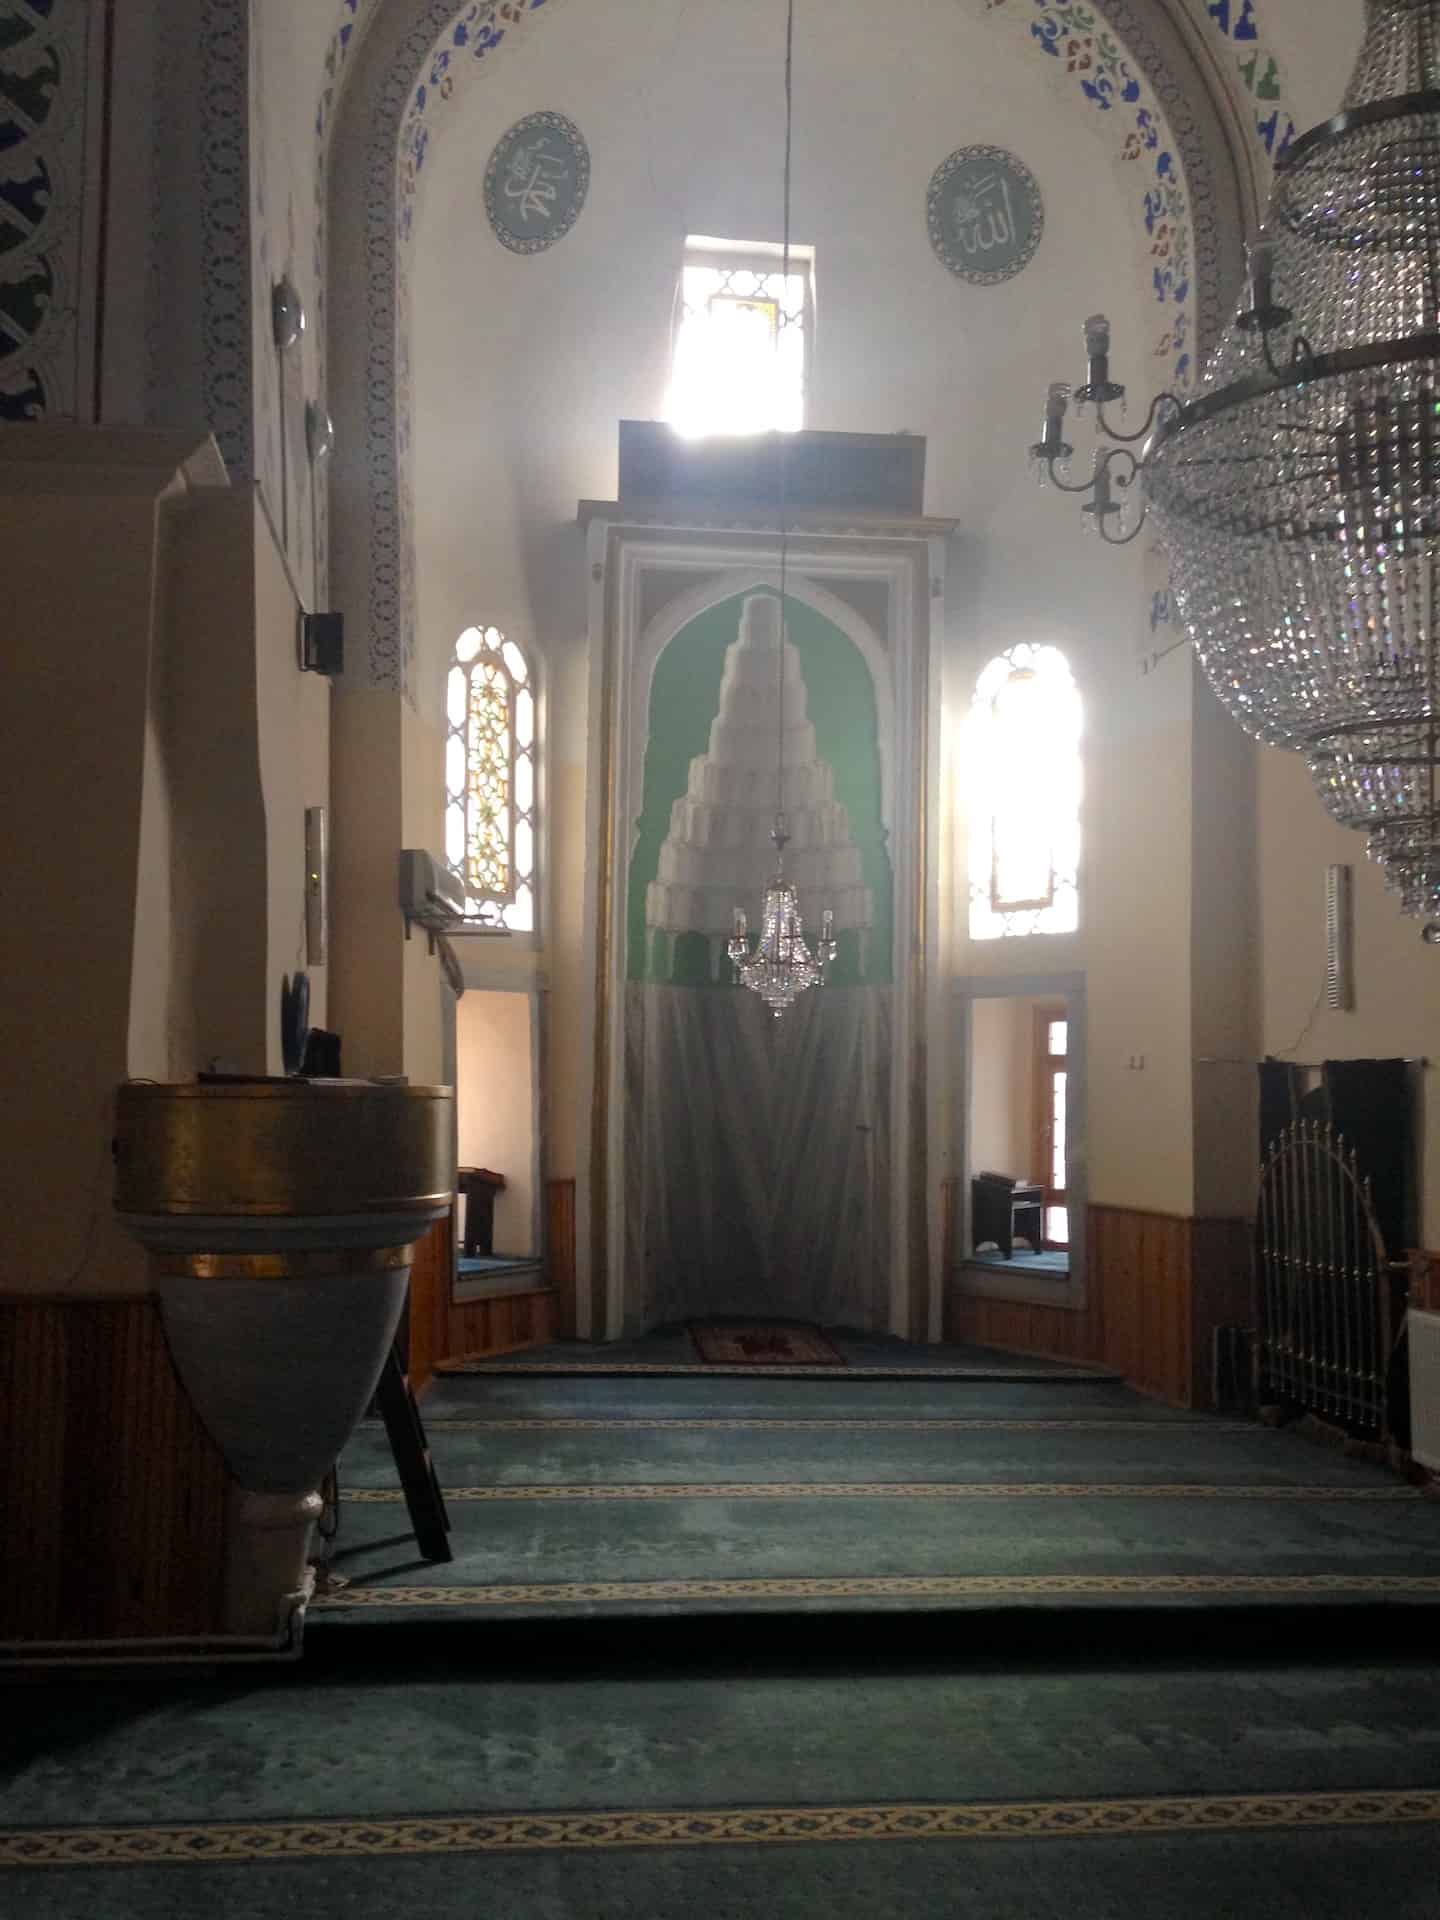 Prayer hall of the Atik Mustafa Pasha Mosque in Ayvansaray, Istanbul, Turkey